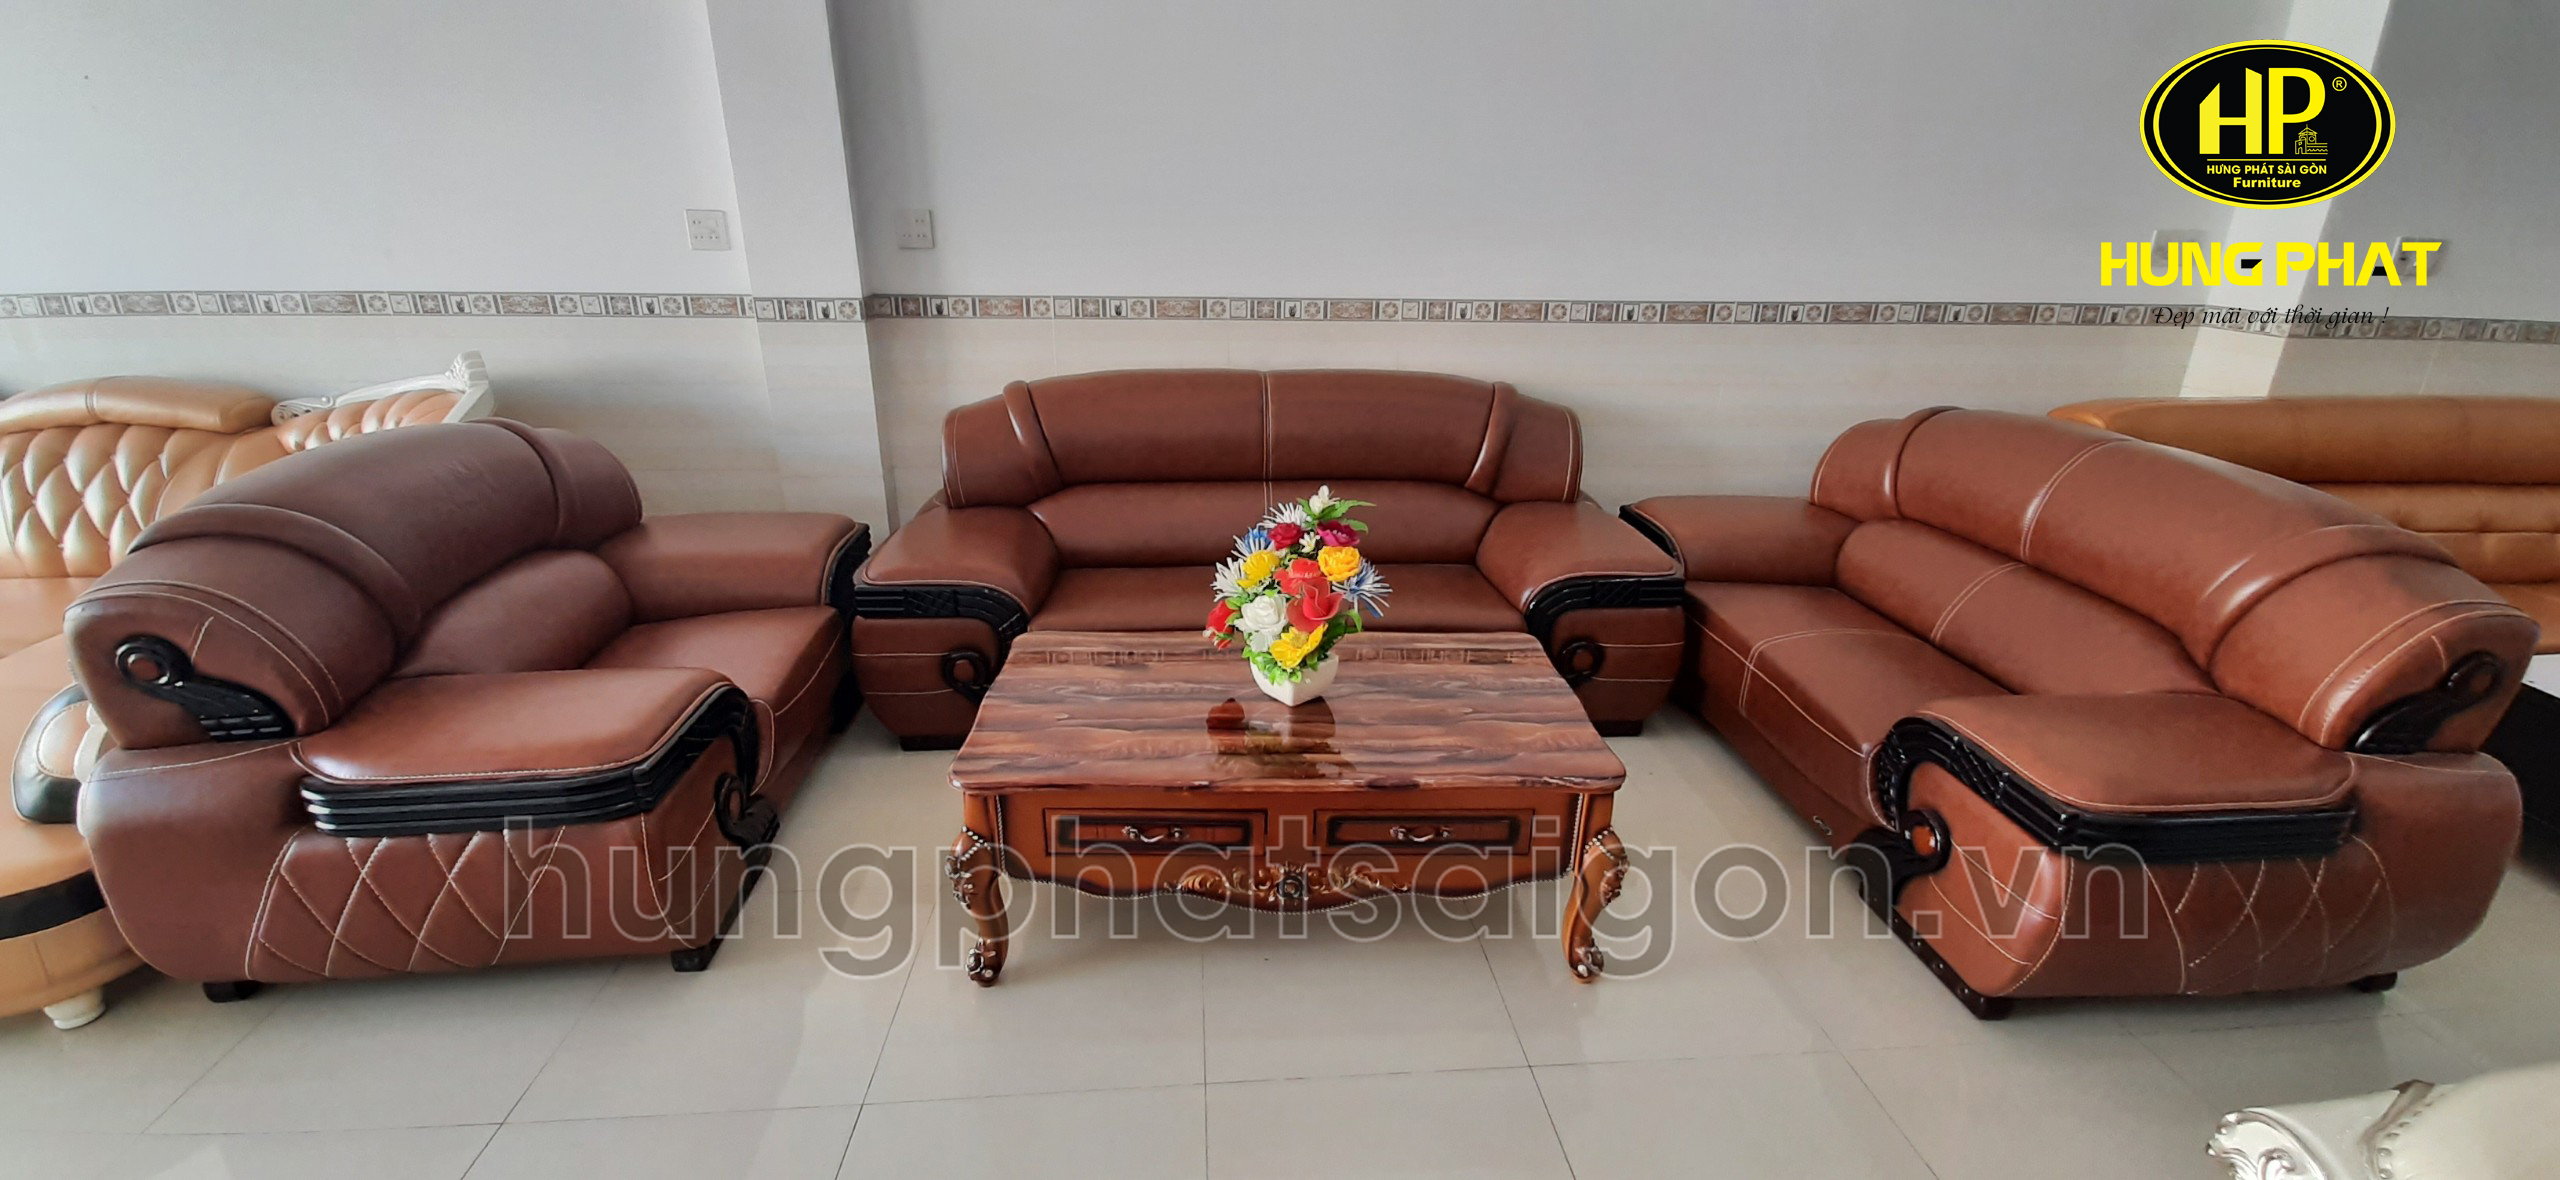 sofa van phong hungphatsaigon.vn